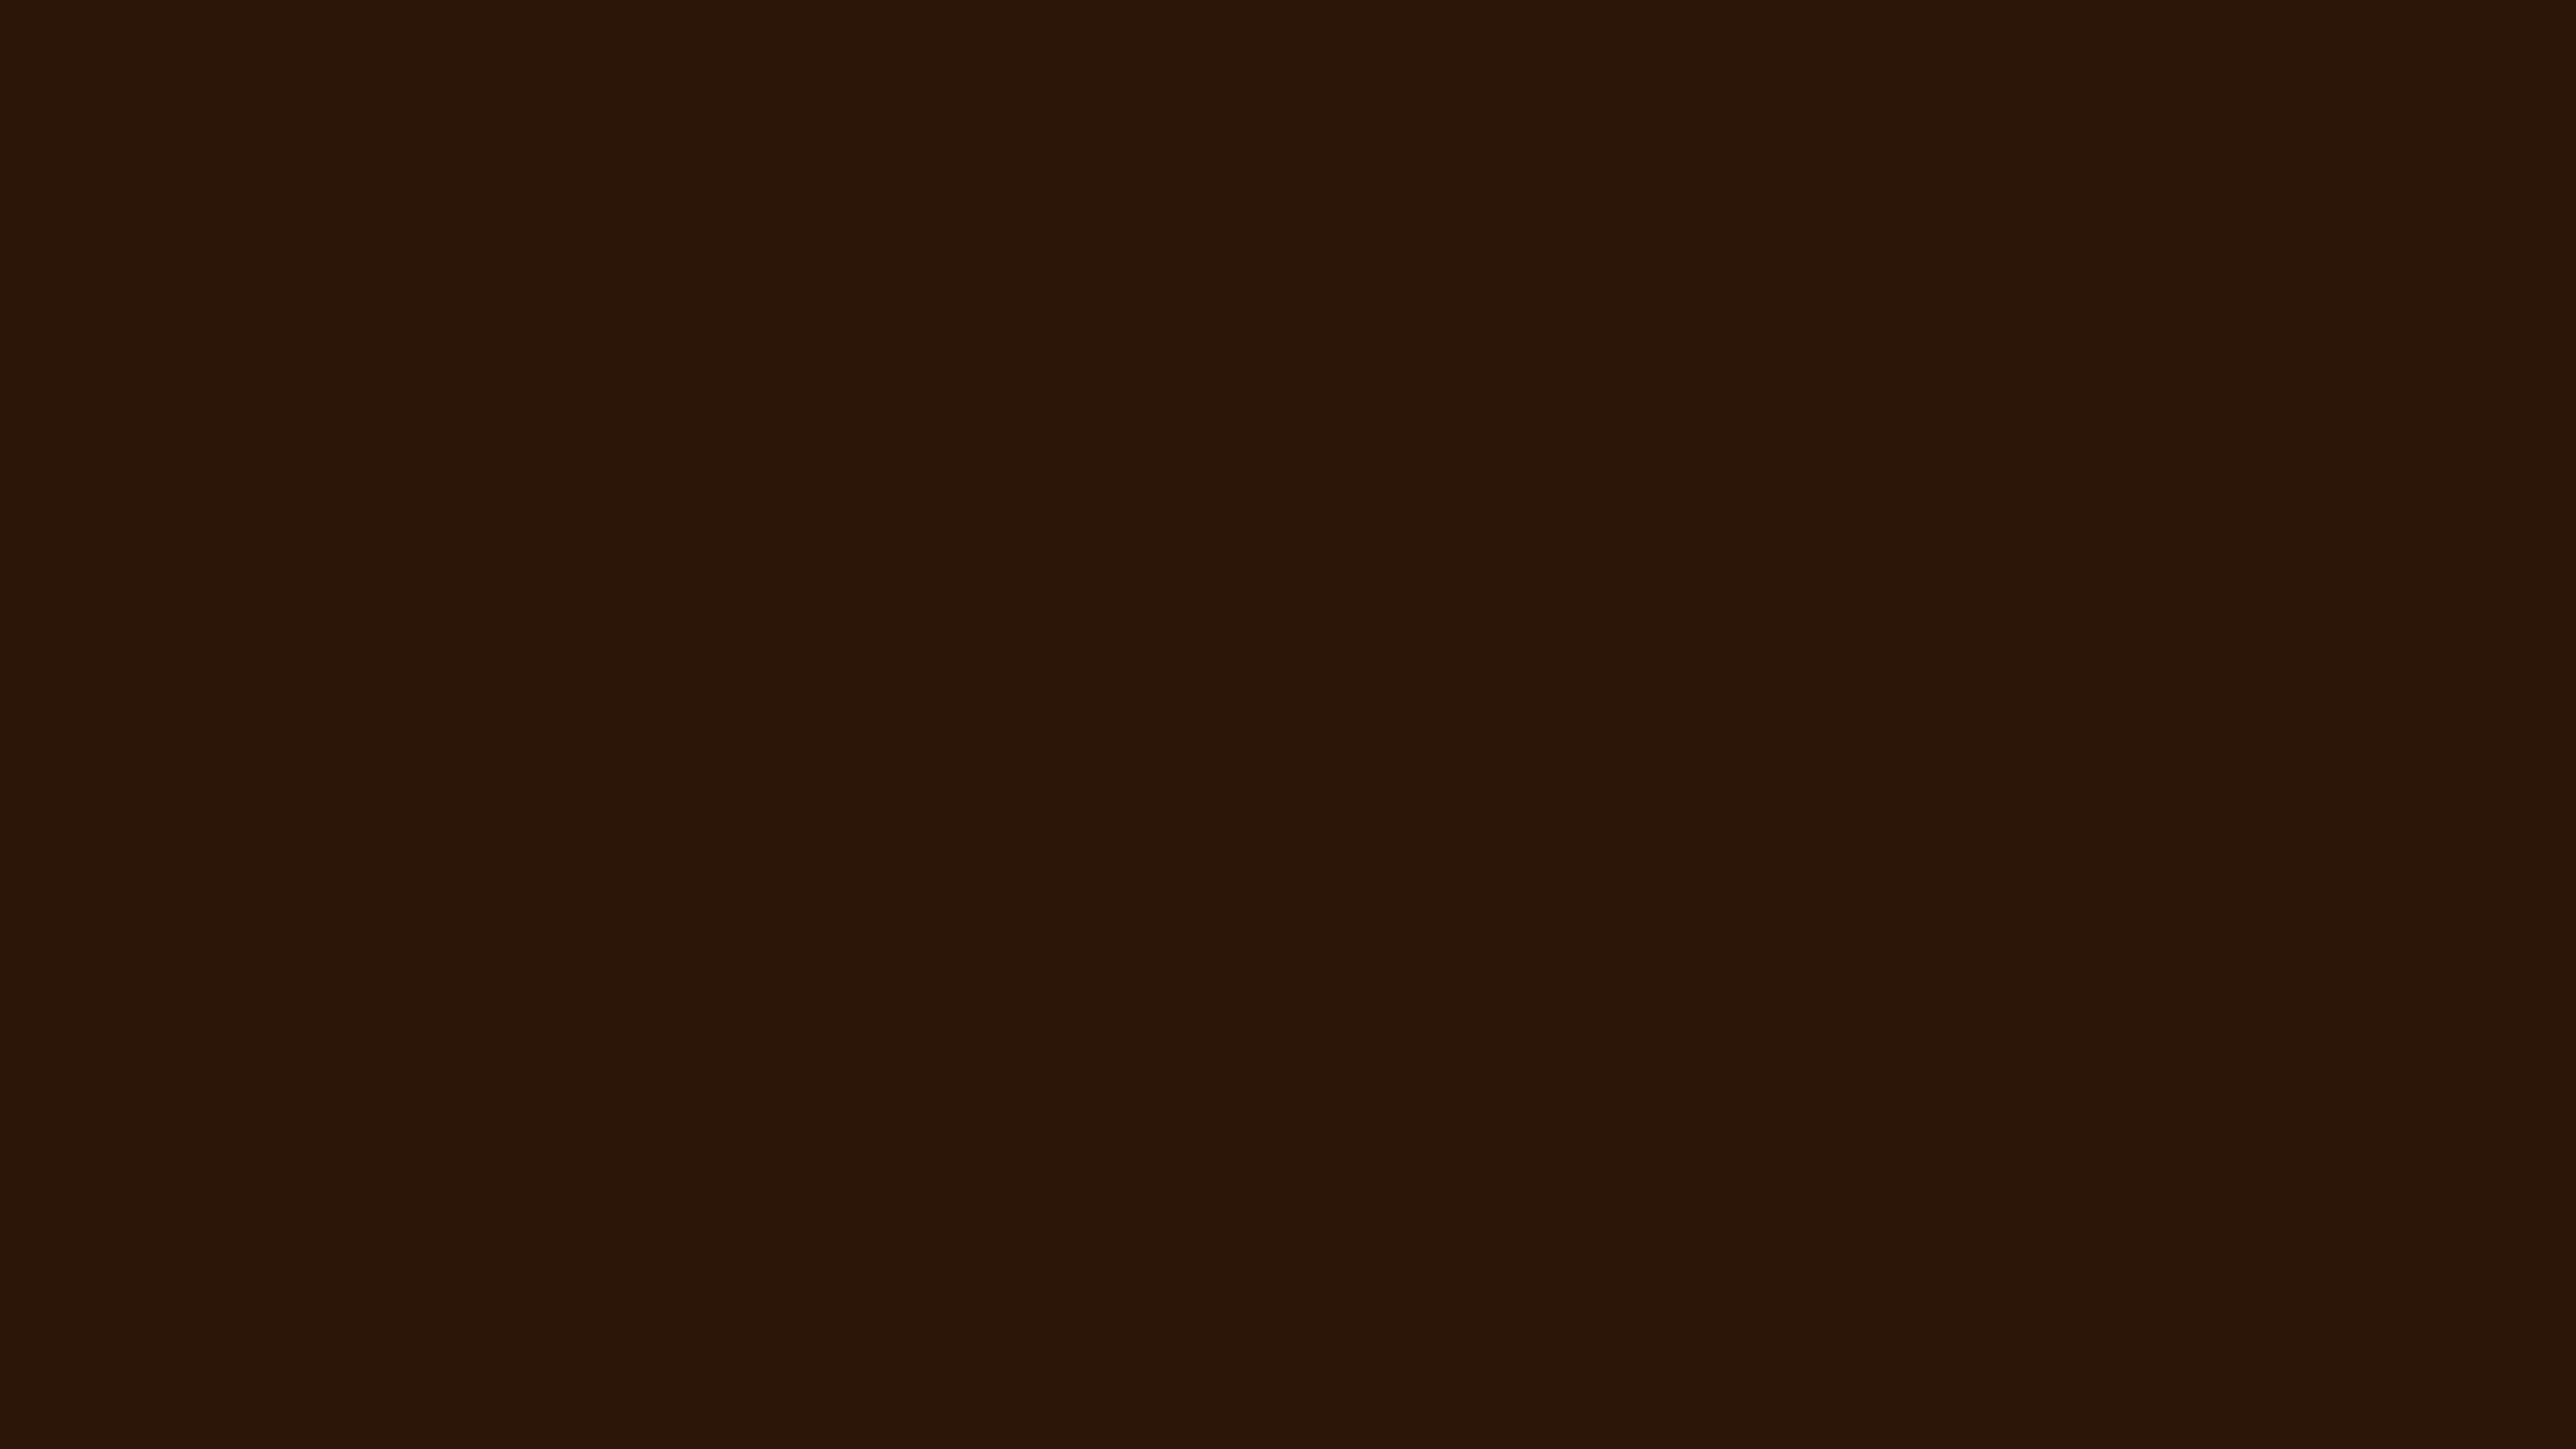 5120x2880 Zinnwaldite Brown Solid Color Background